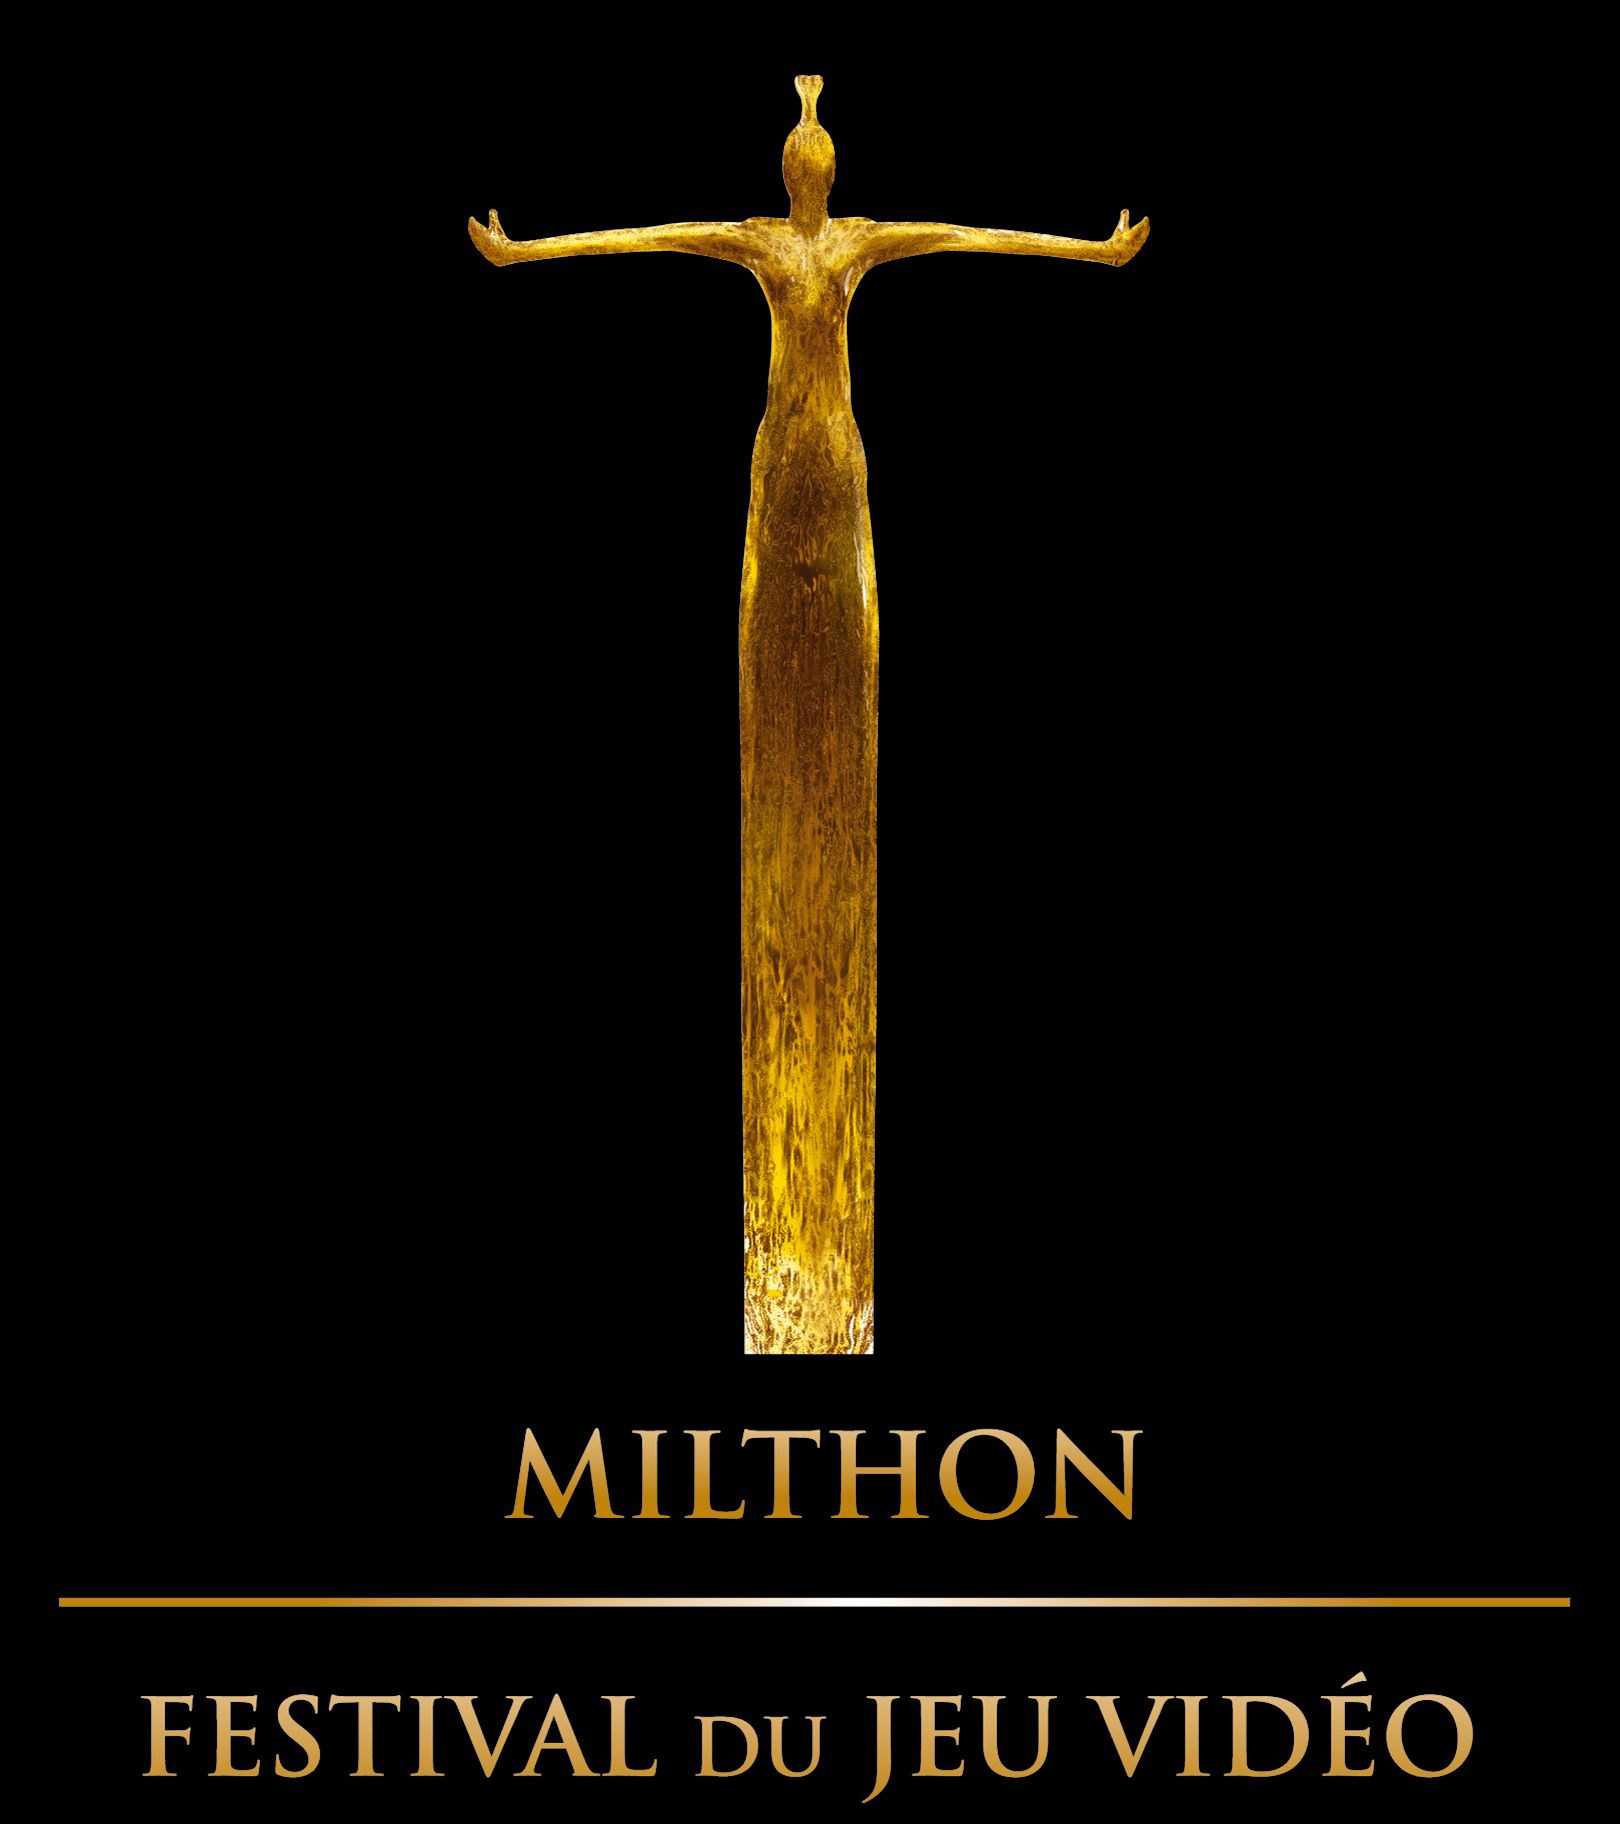 Milthon